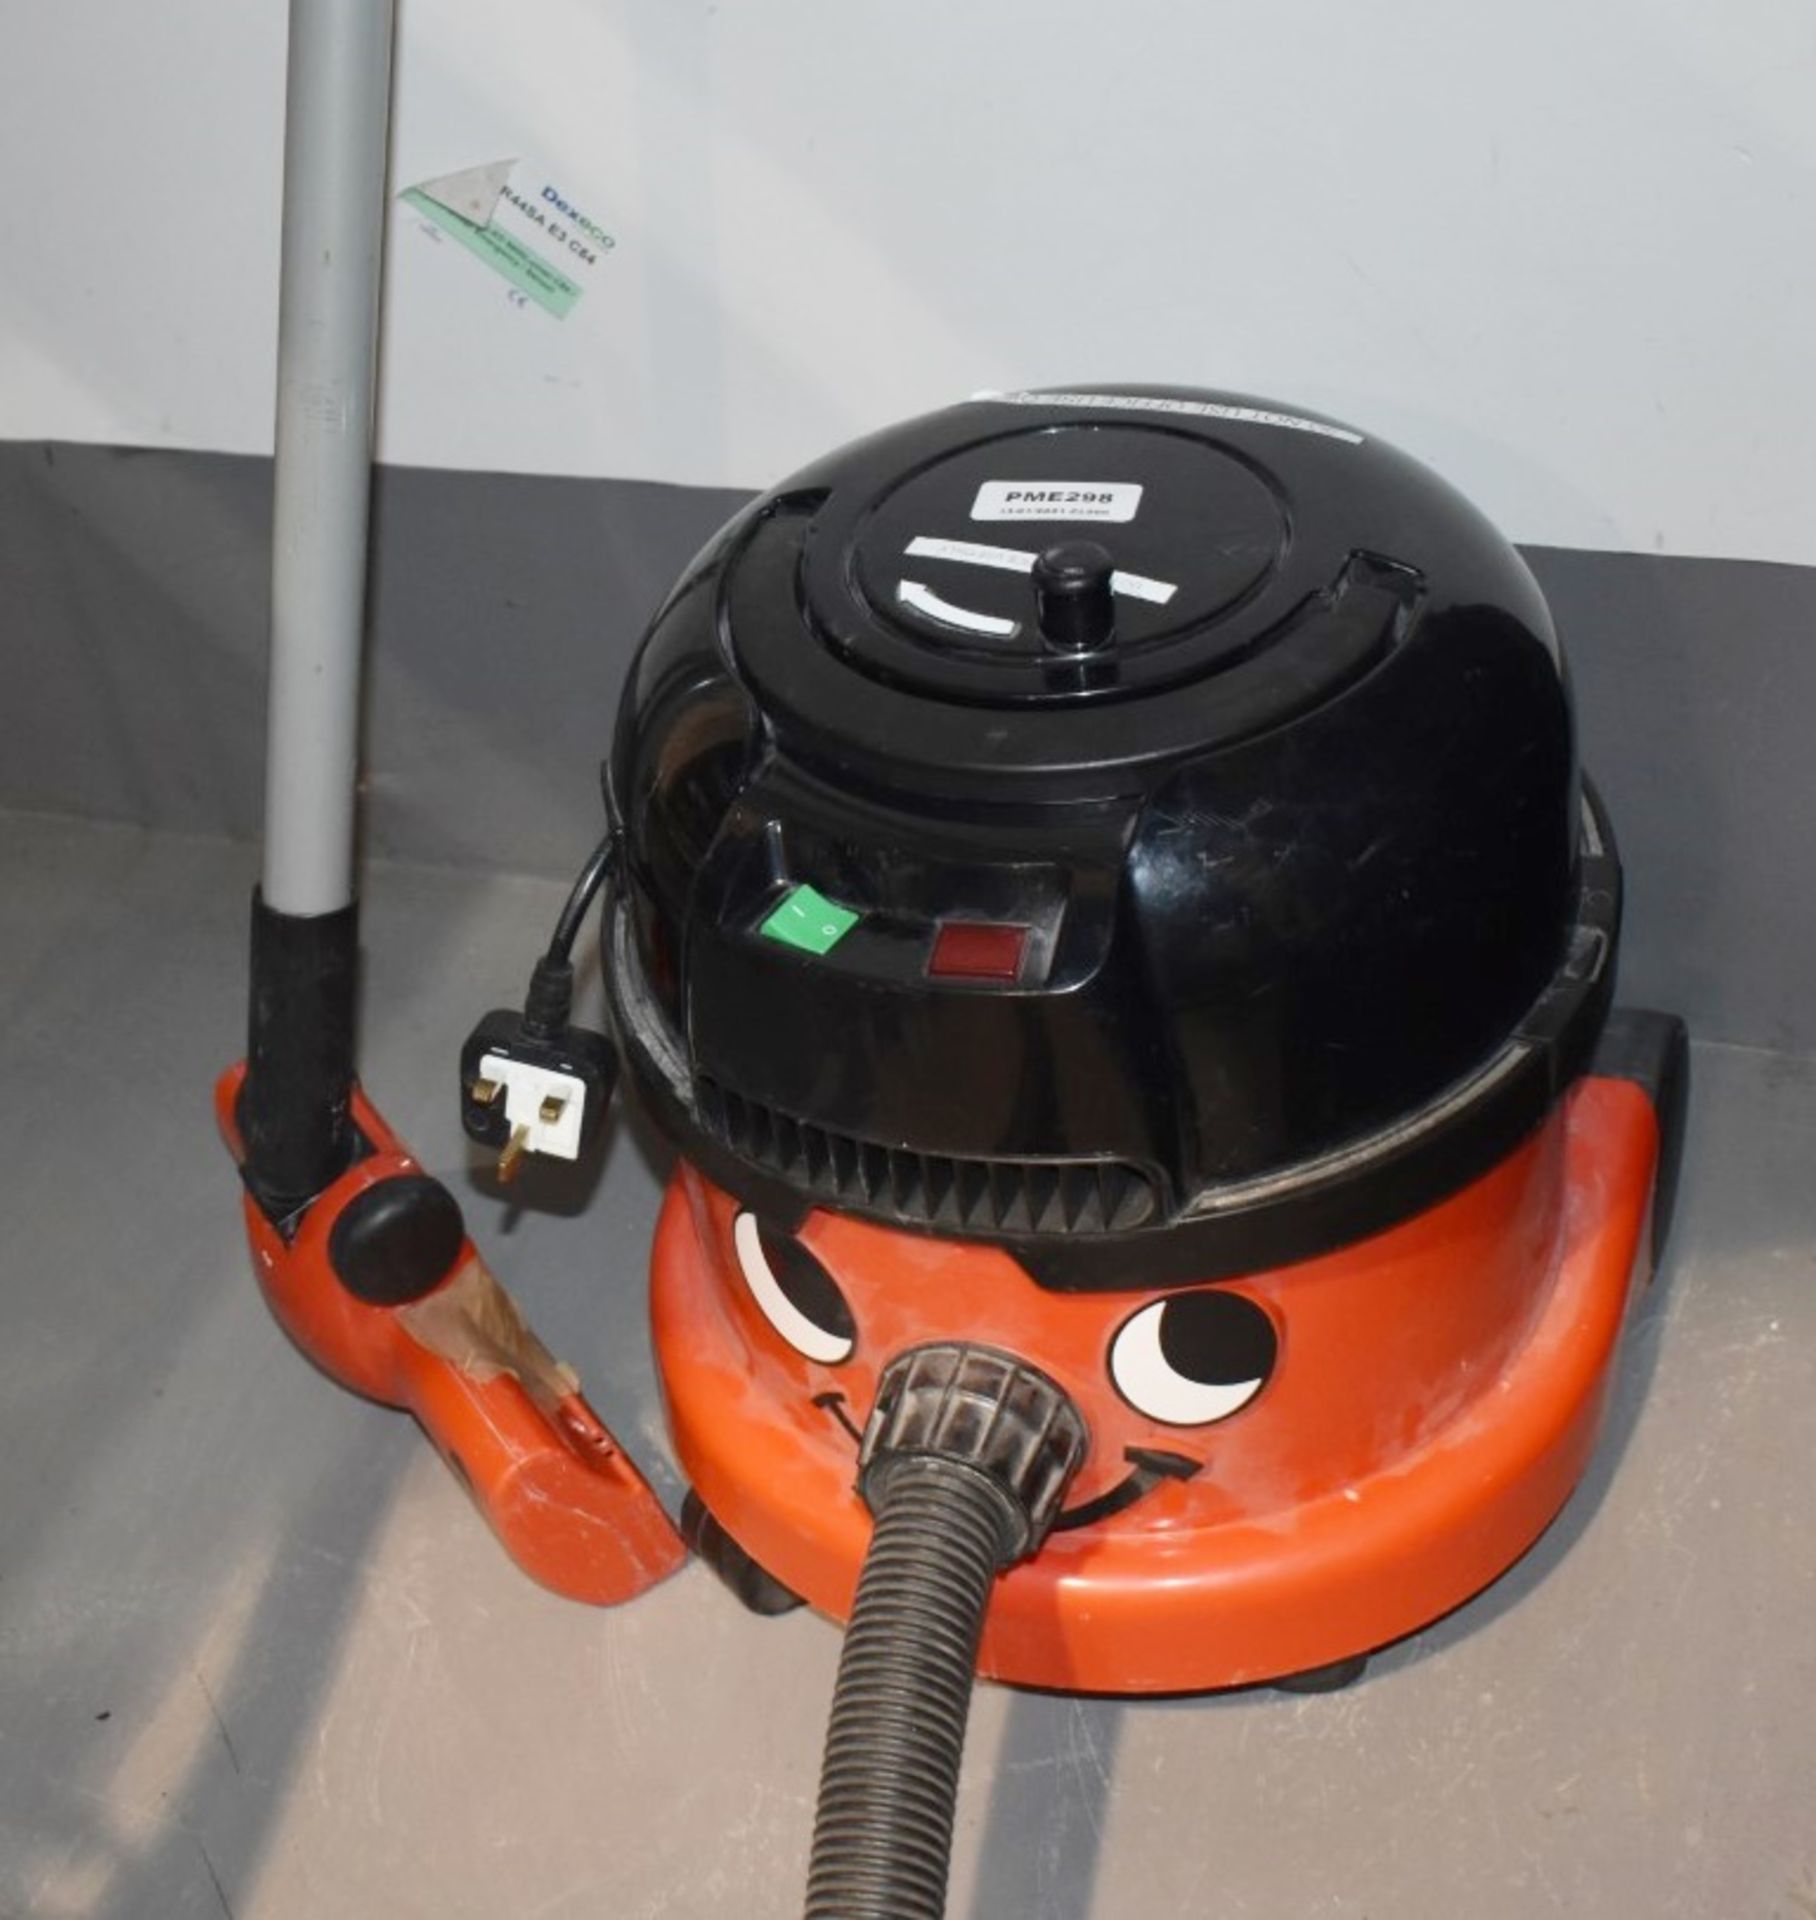 1 x Numatic Henry Vacuum Cleaner PME298